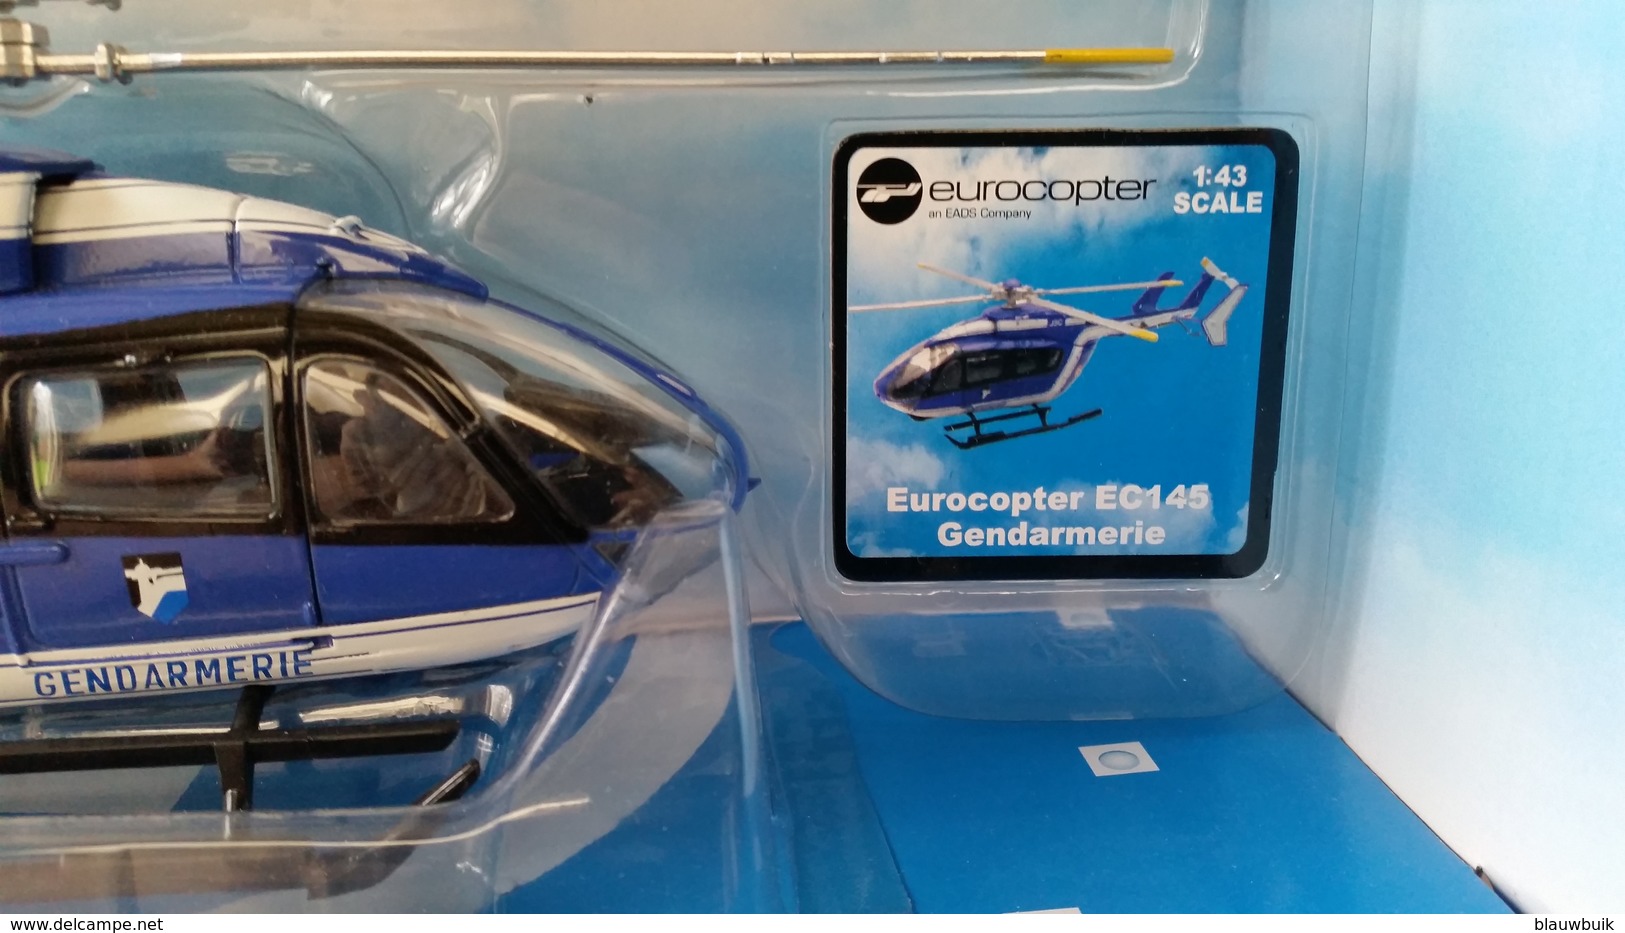 New Ray 26003 "Eurocopter EC135" - Luchtvaart